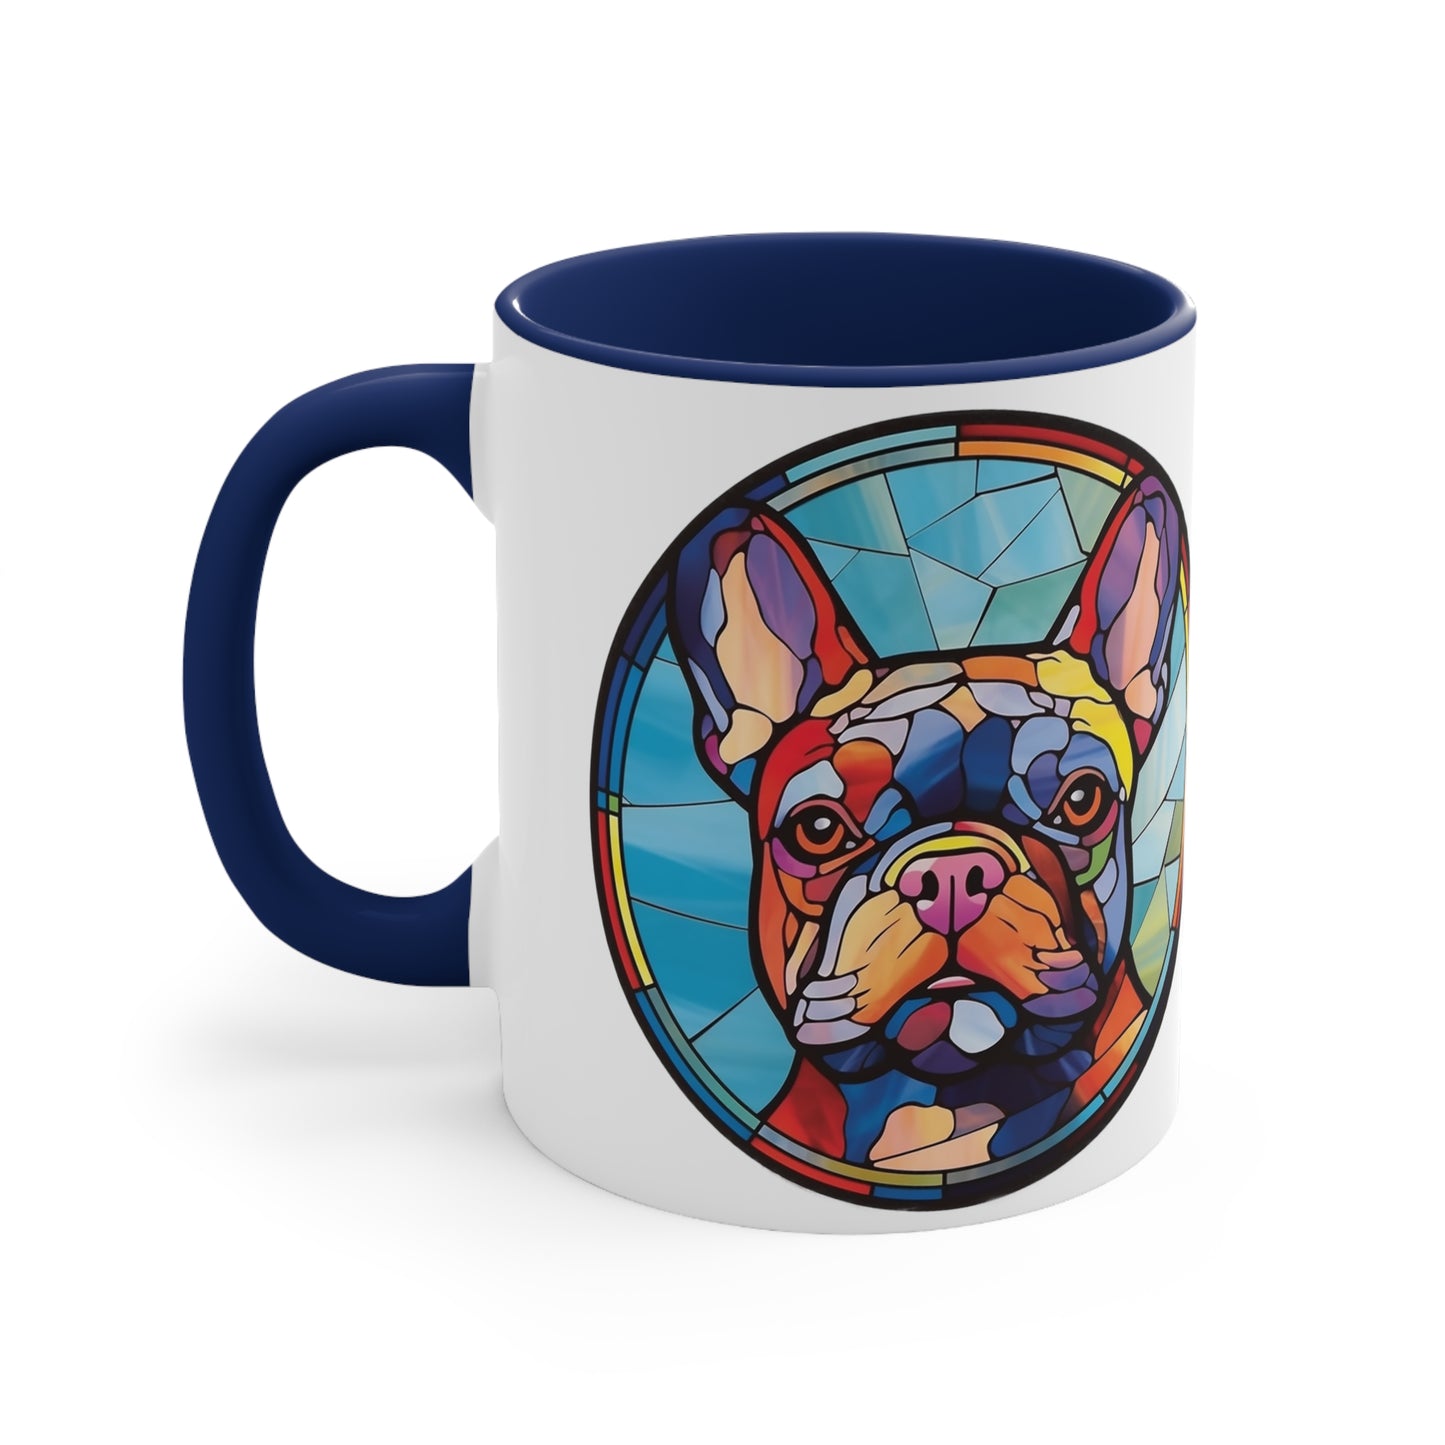 FRENCH BULLDOG MUG - Dog Breeds Mugs - Red, Pink, Blue, Navy and Black Accents - MUGSCITY - Free Shipping